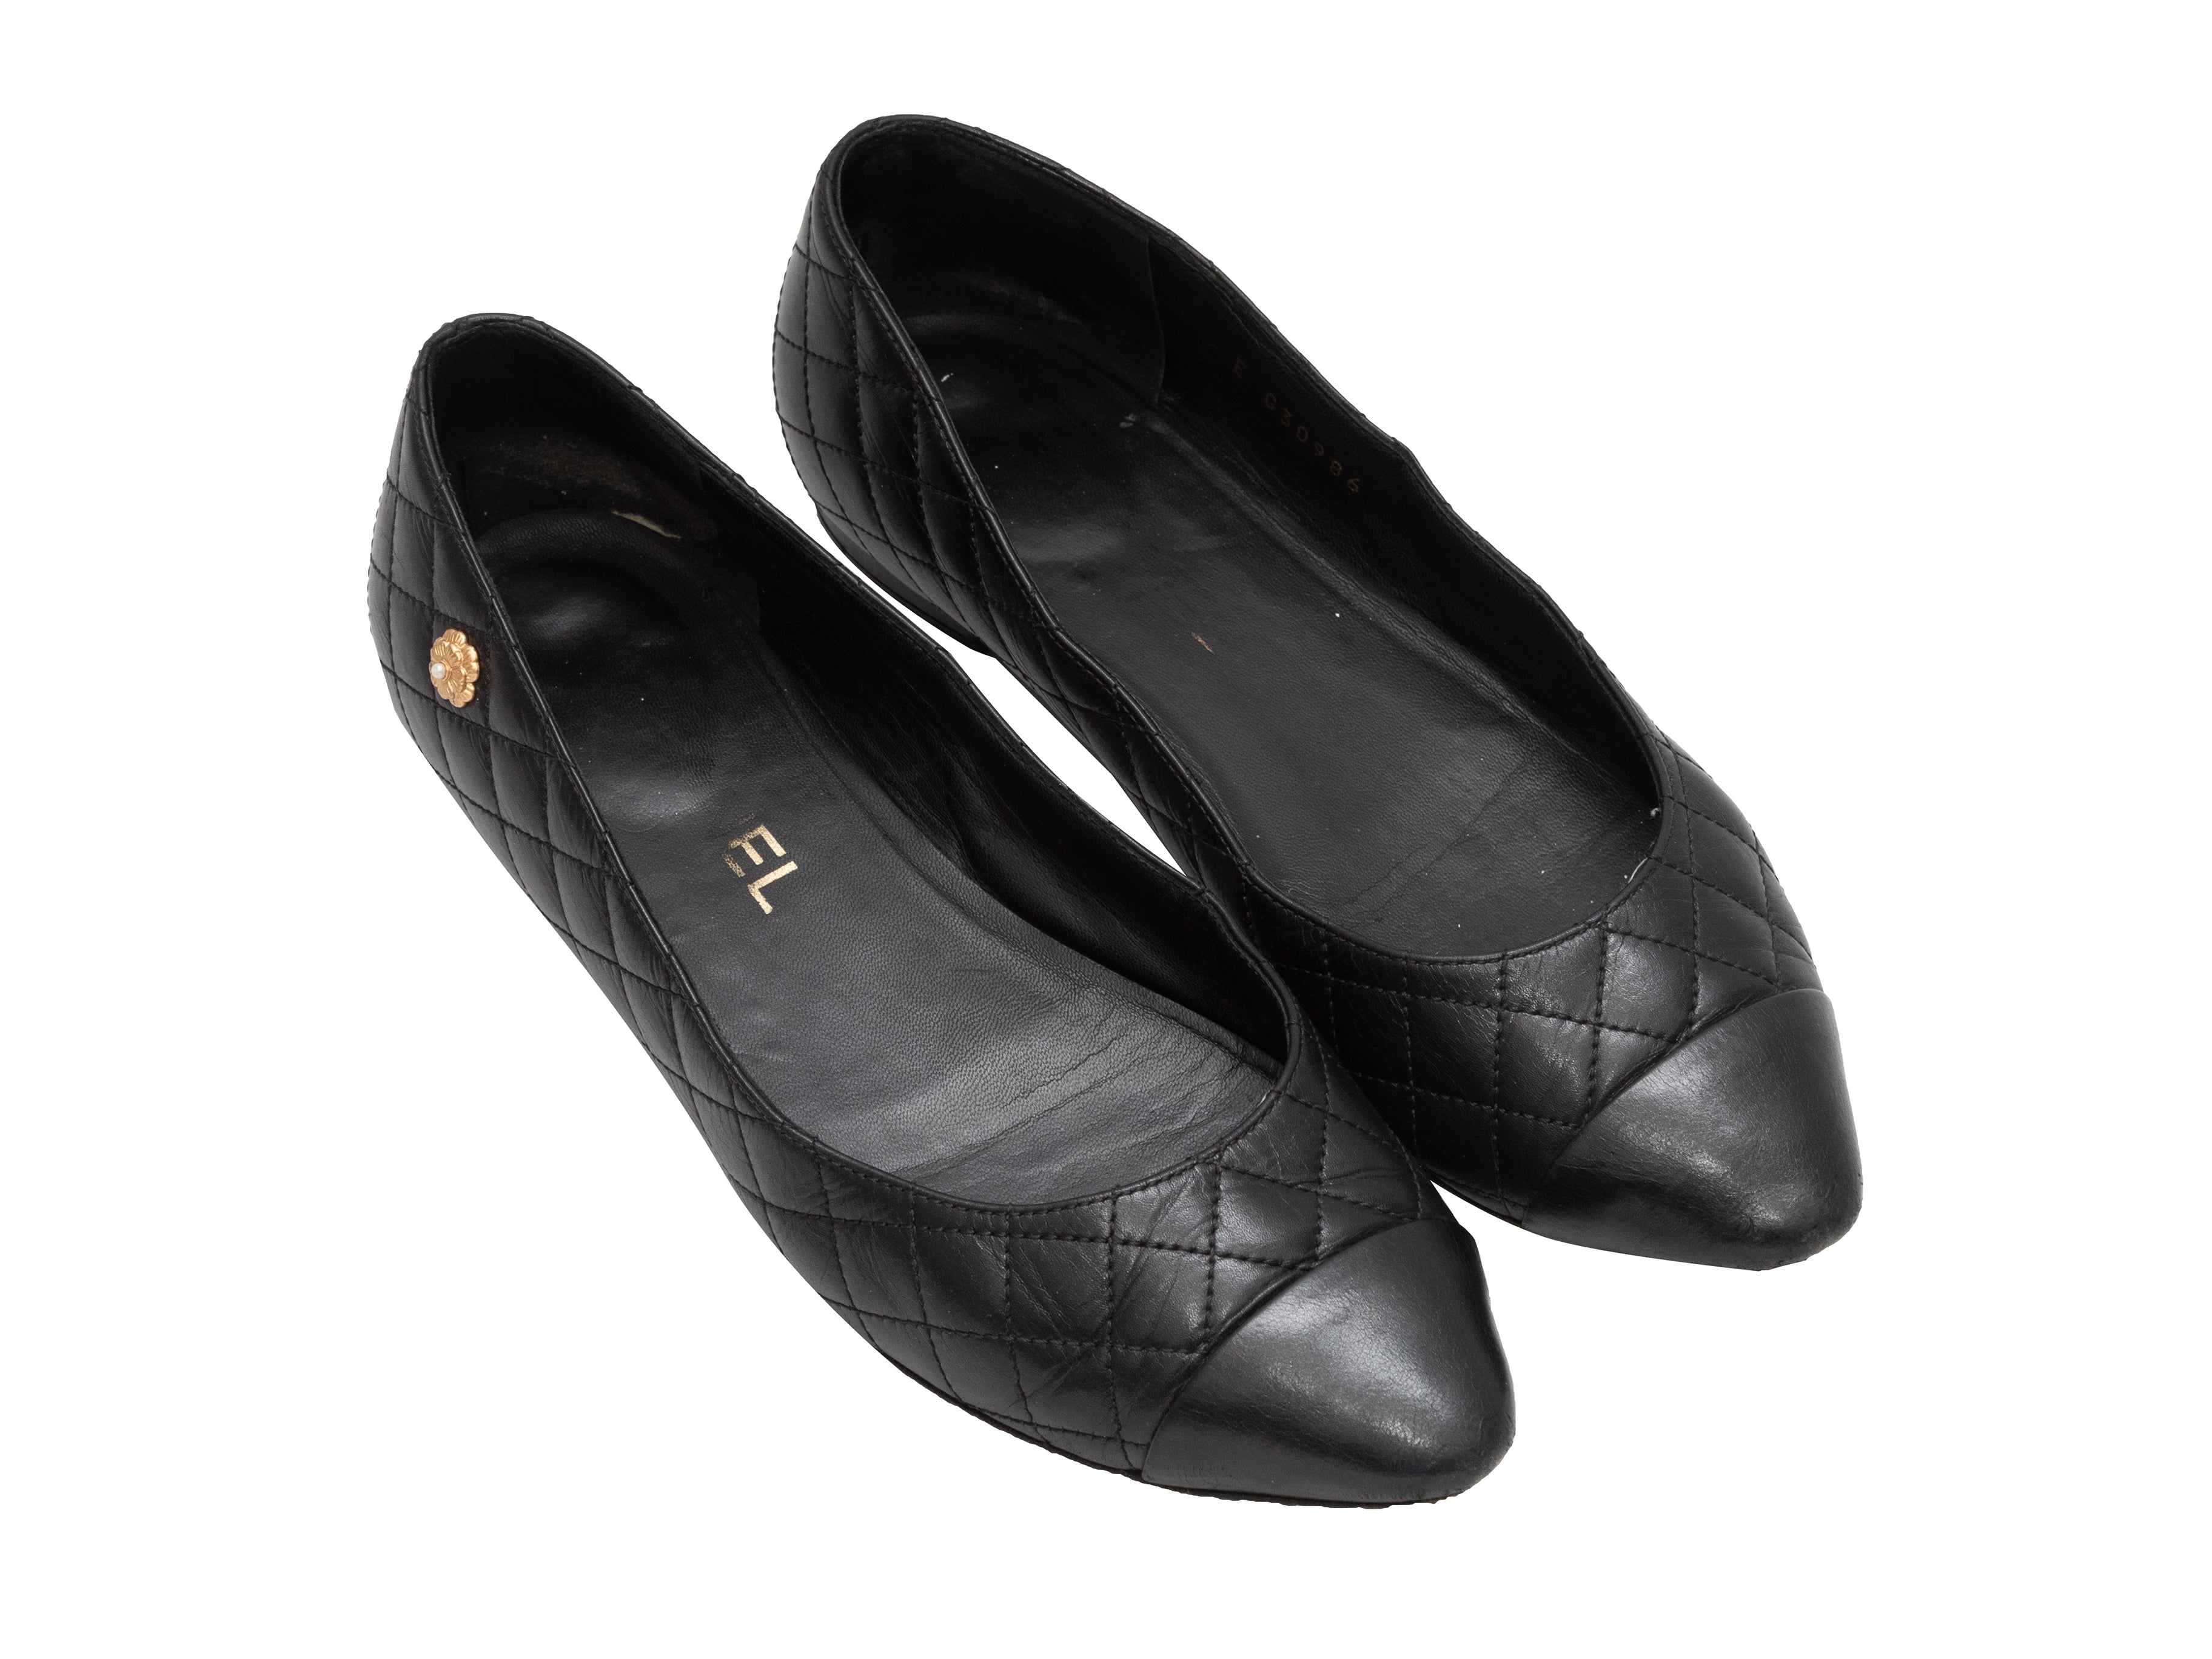 Pre-Owned Chanel Black Size 39.5 Ballet Ballet Flat